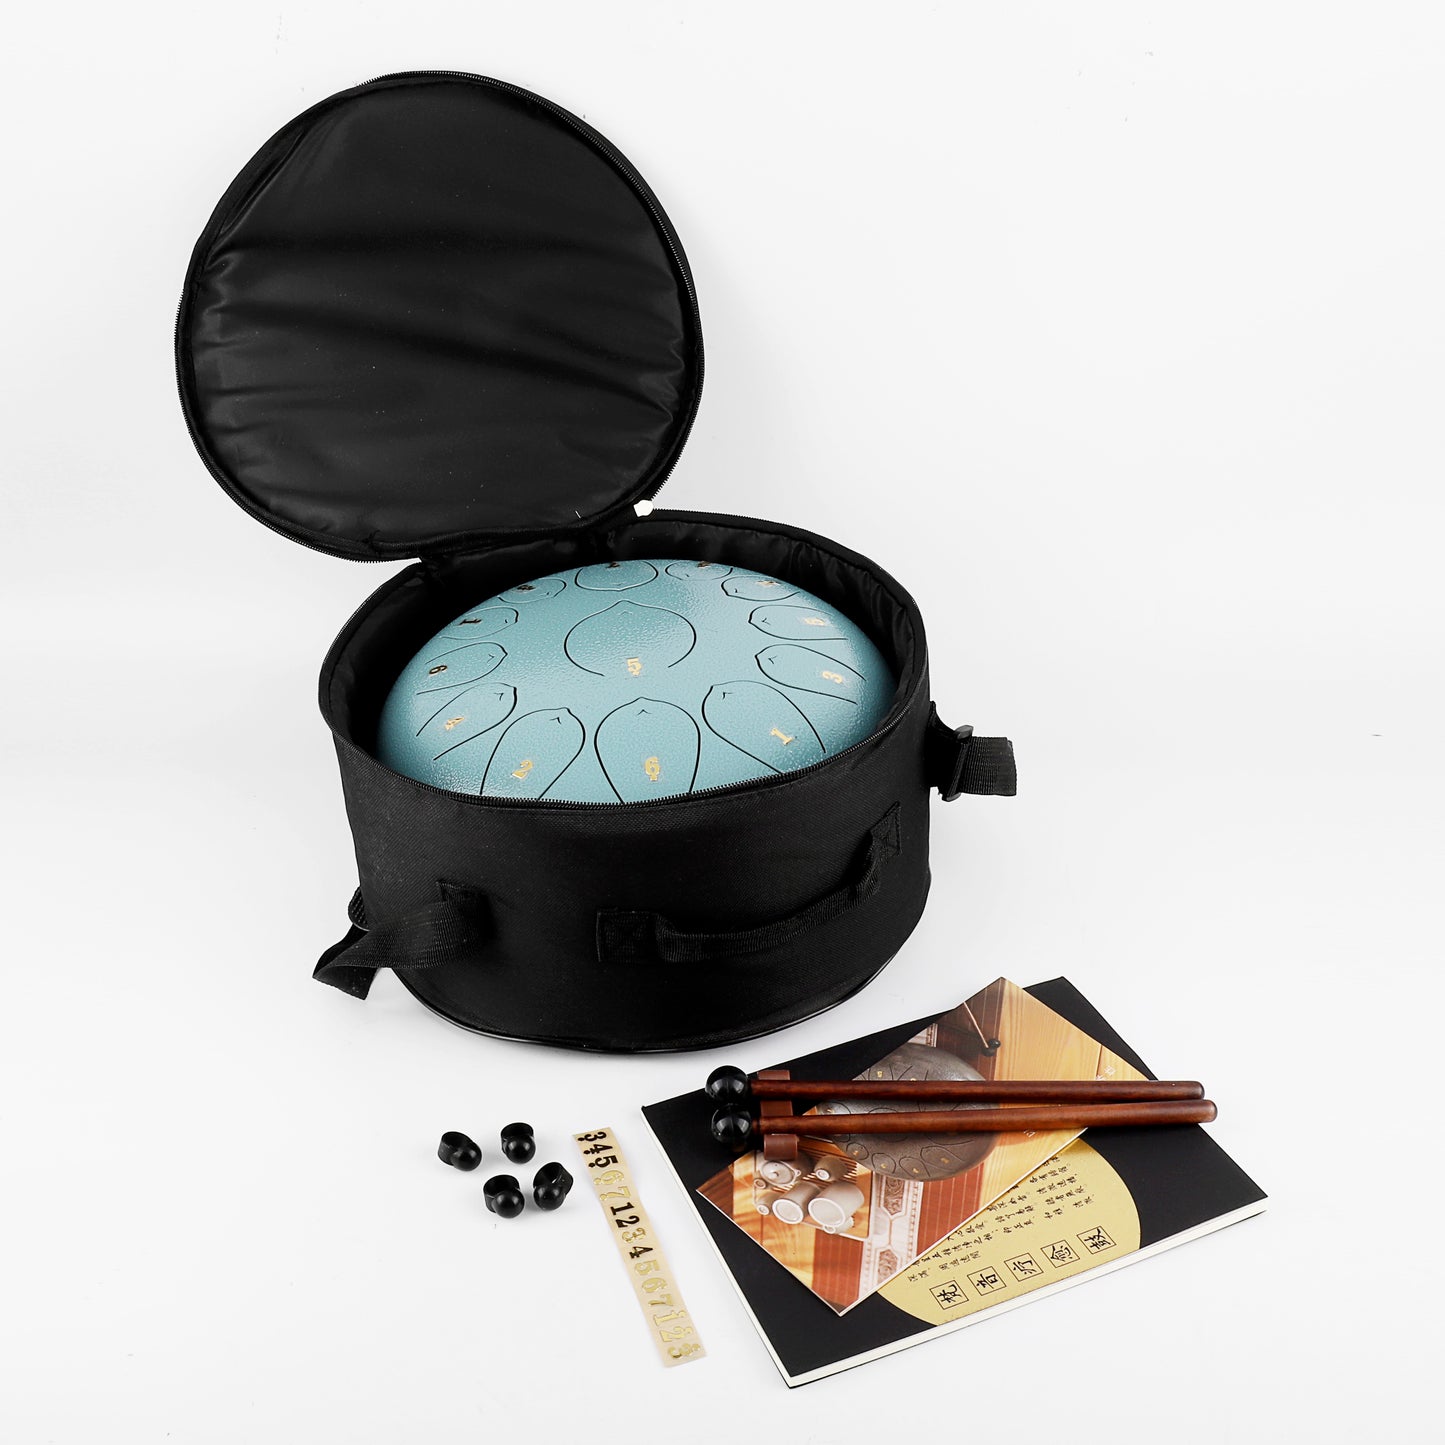 Jooleer Steel Tongue Drum Kit with App, Music Book, Steel Handpan Drum Mallets, and Carry Bag